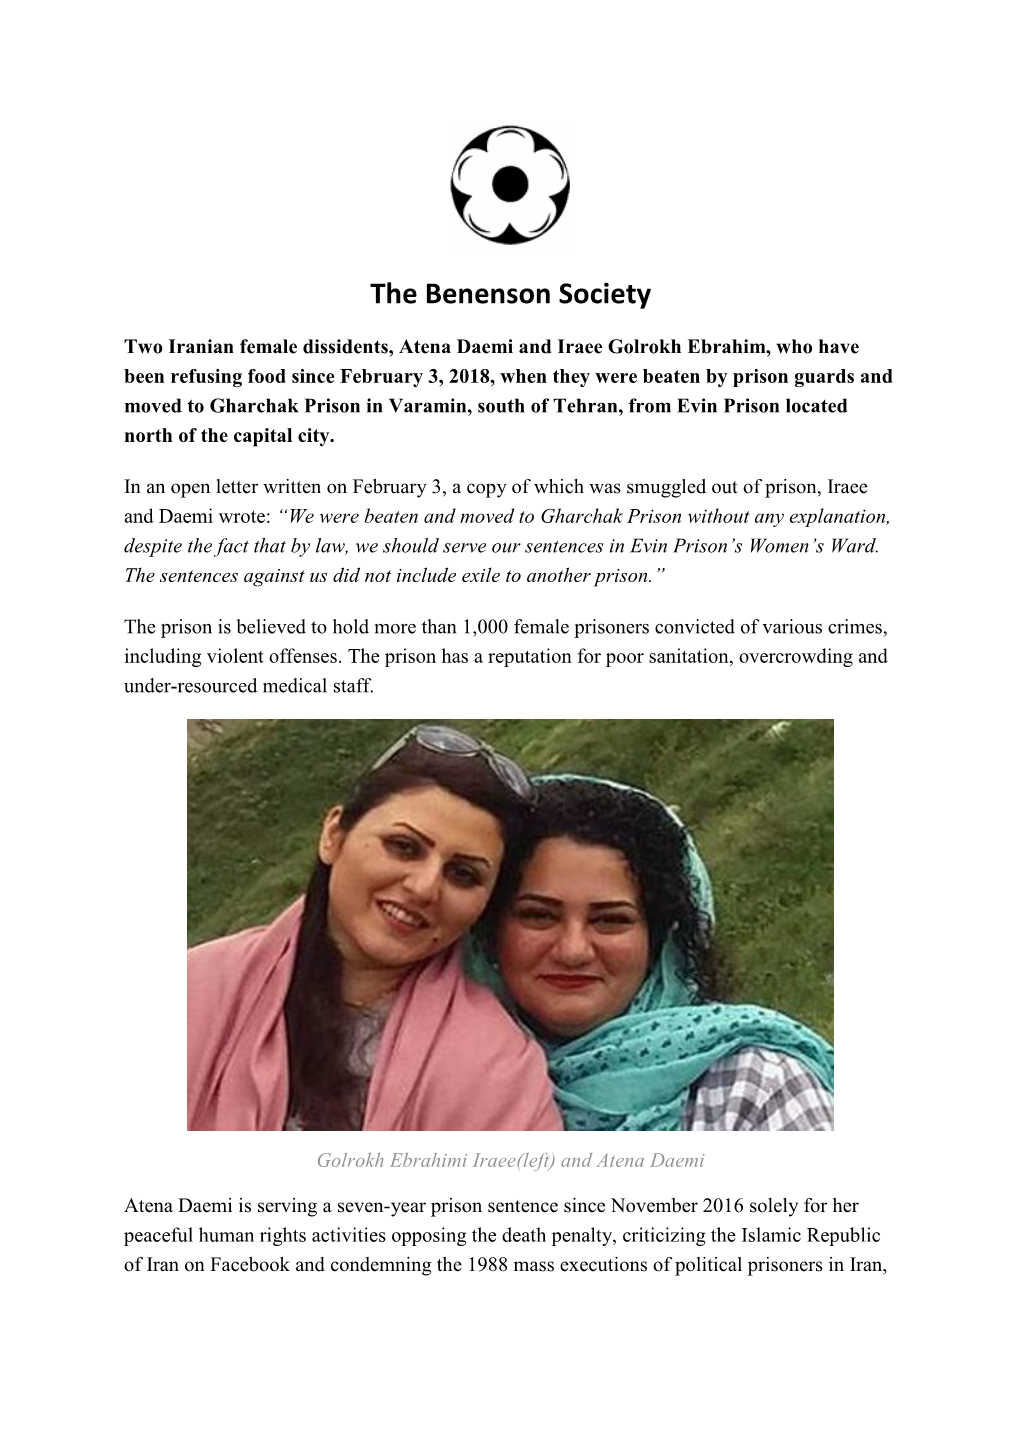 Campaign for Atena Daemi and Iraee Golrokh